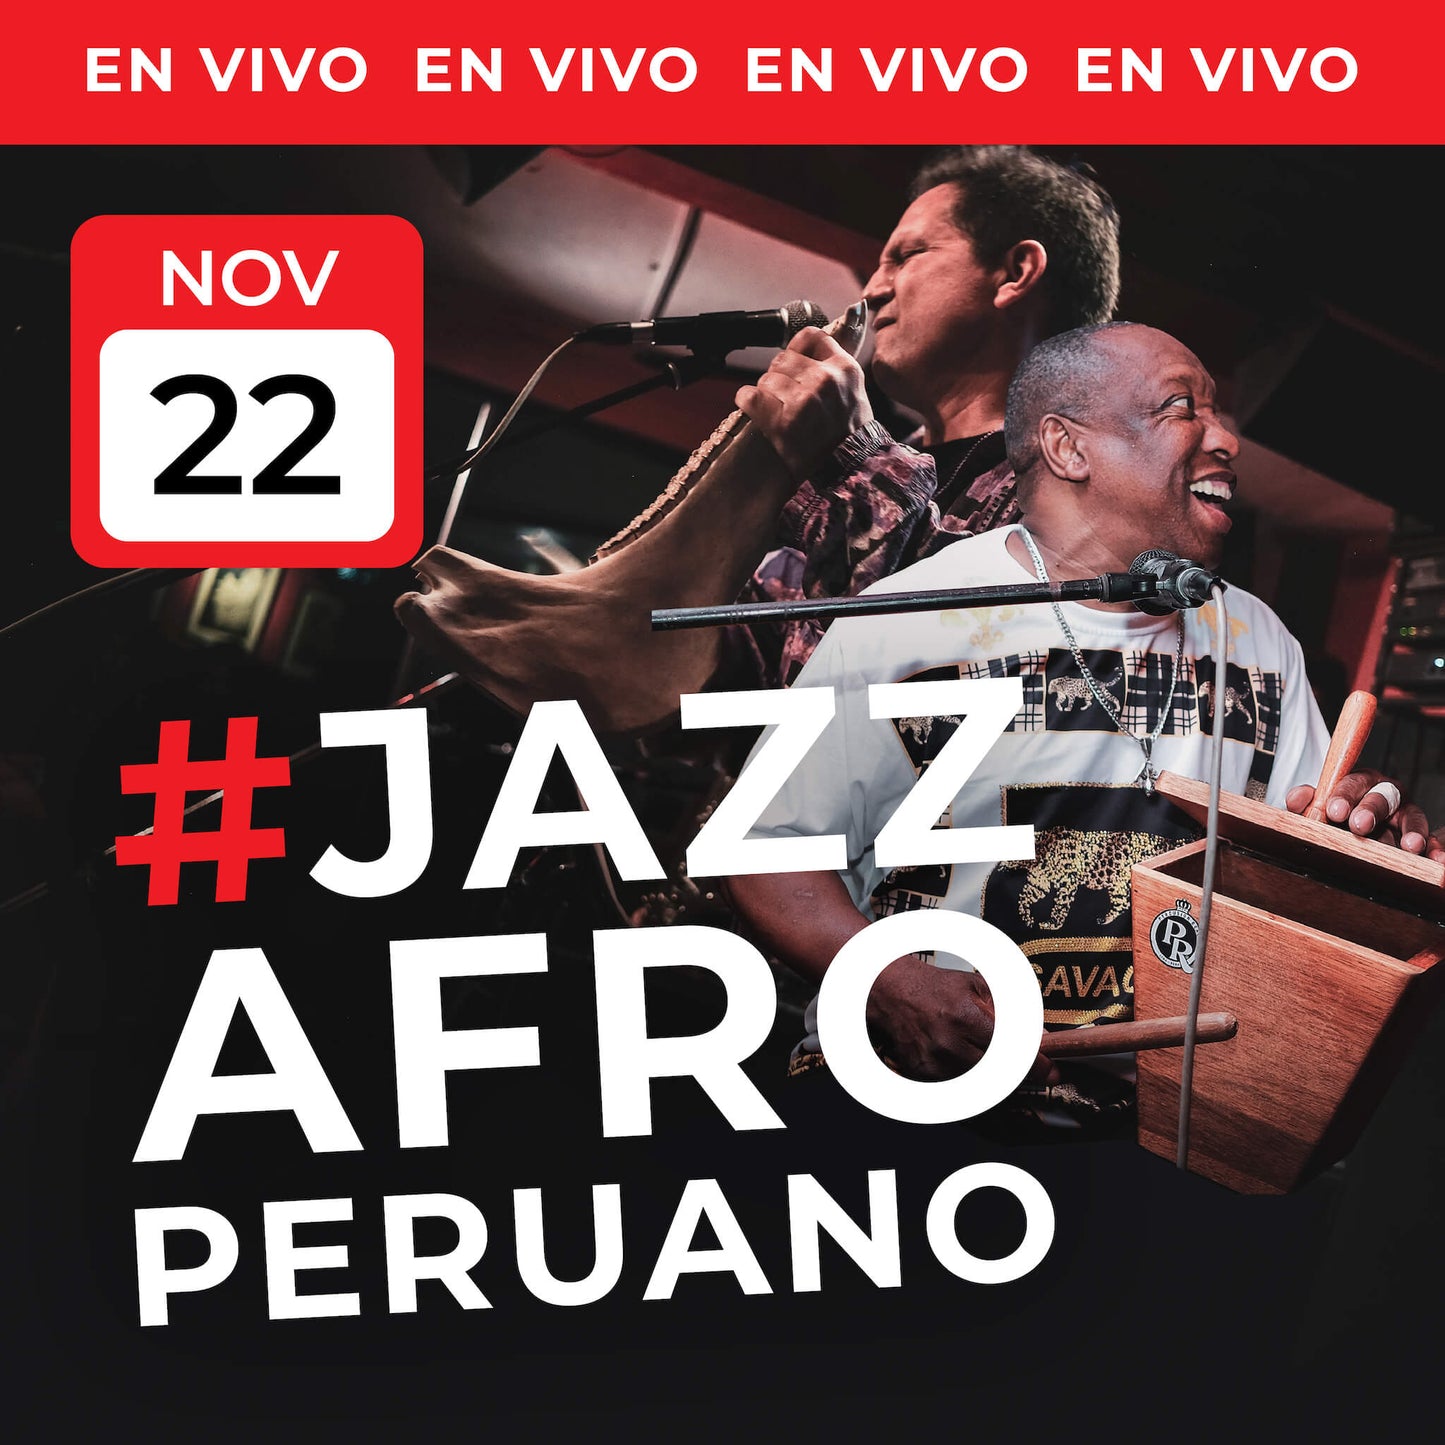 22 Nov | #JazzAfroperuano EN VIVO